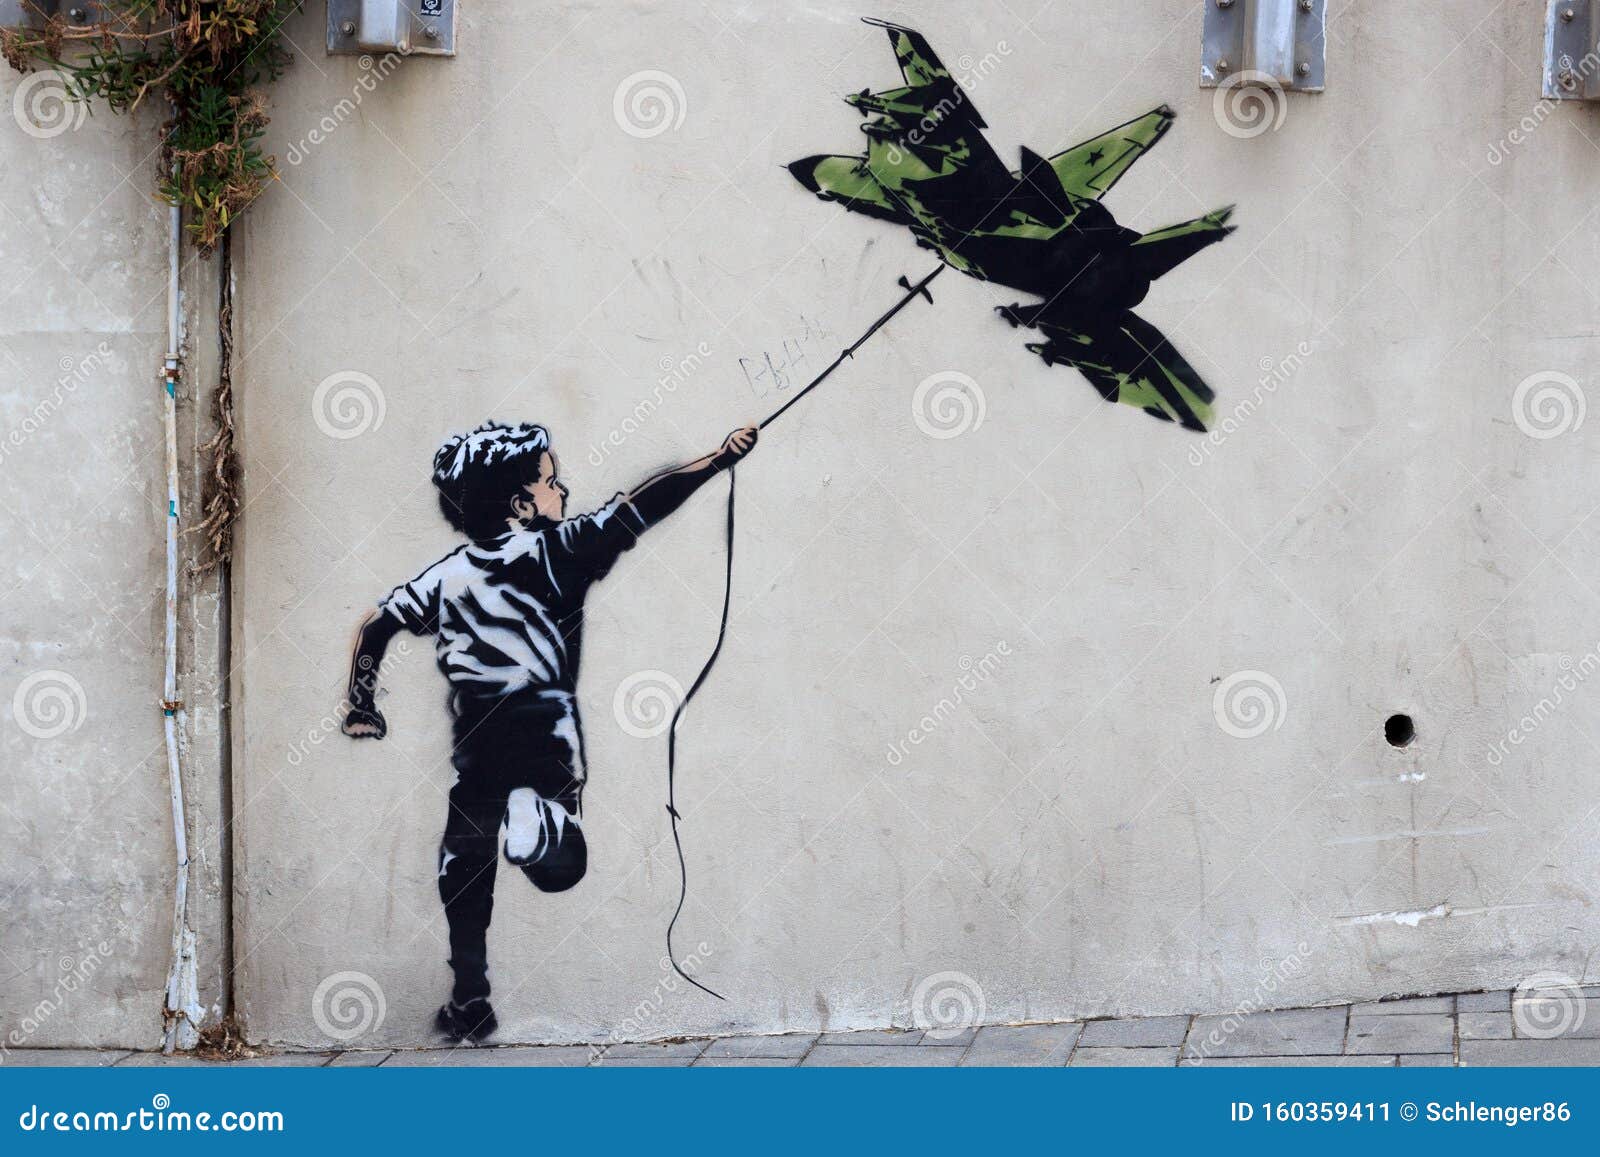 Banksy Street Art Graffiti Boy with Fighter Aircraft Kite in Tel Aviv, Israel Editorial Photo - Image of fighter, journey: 160359411